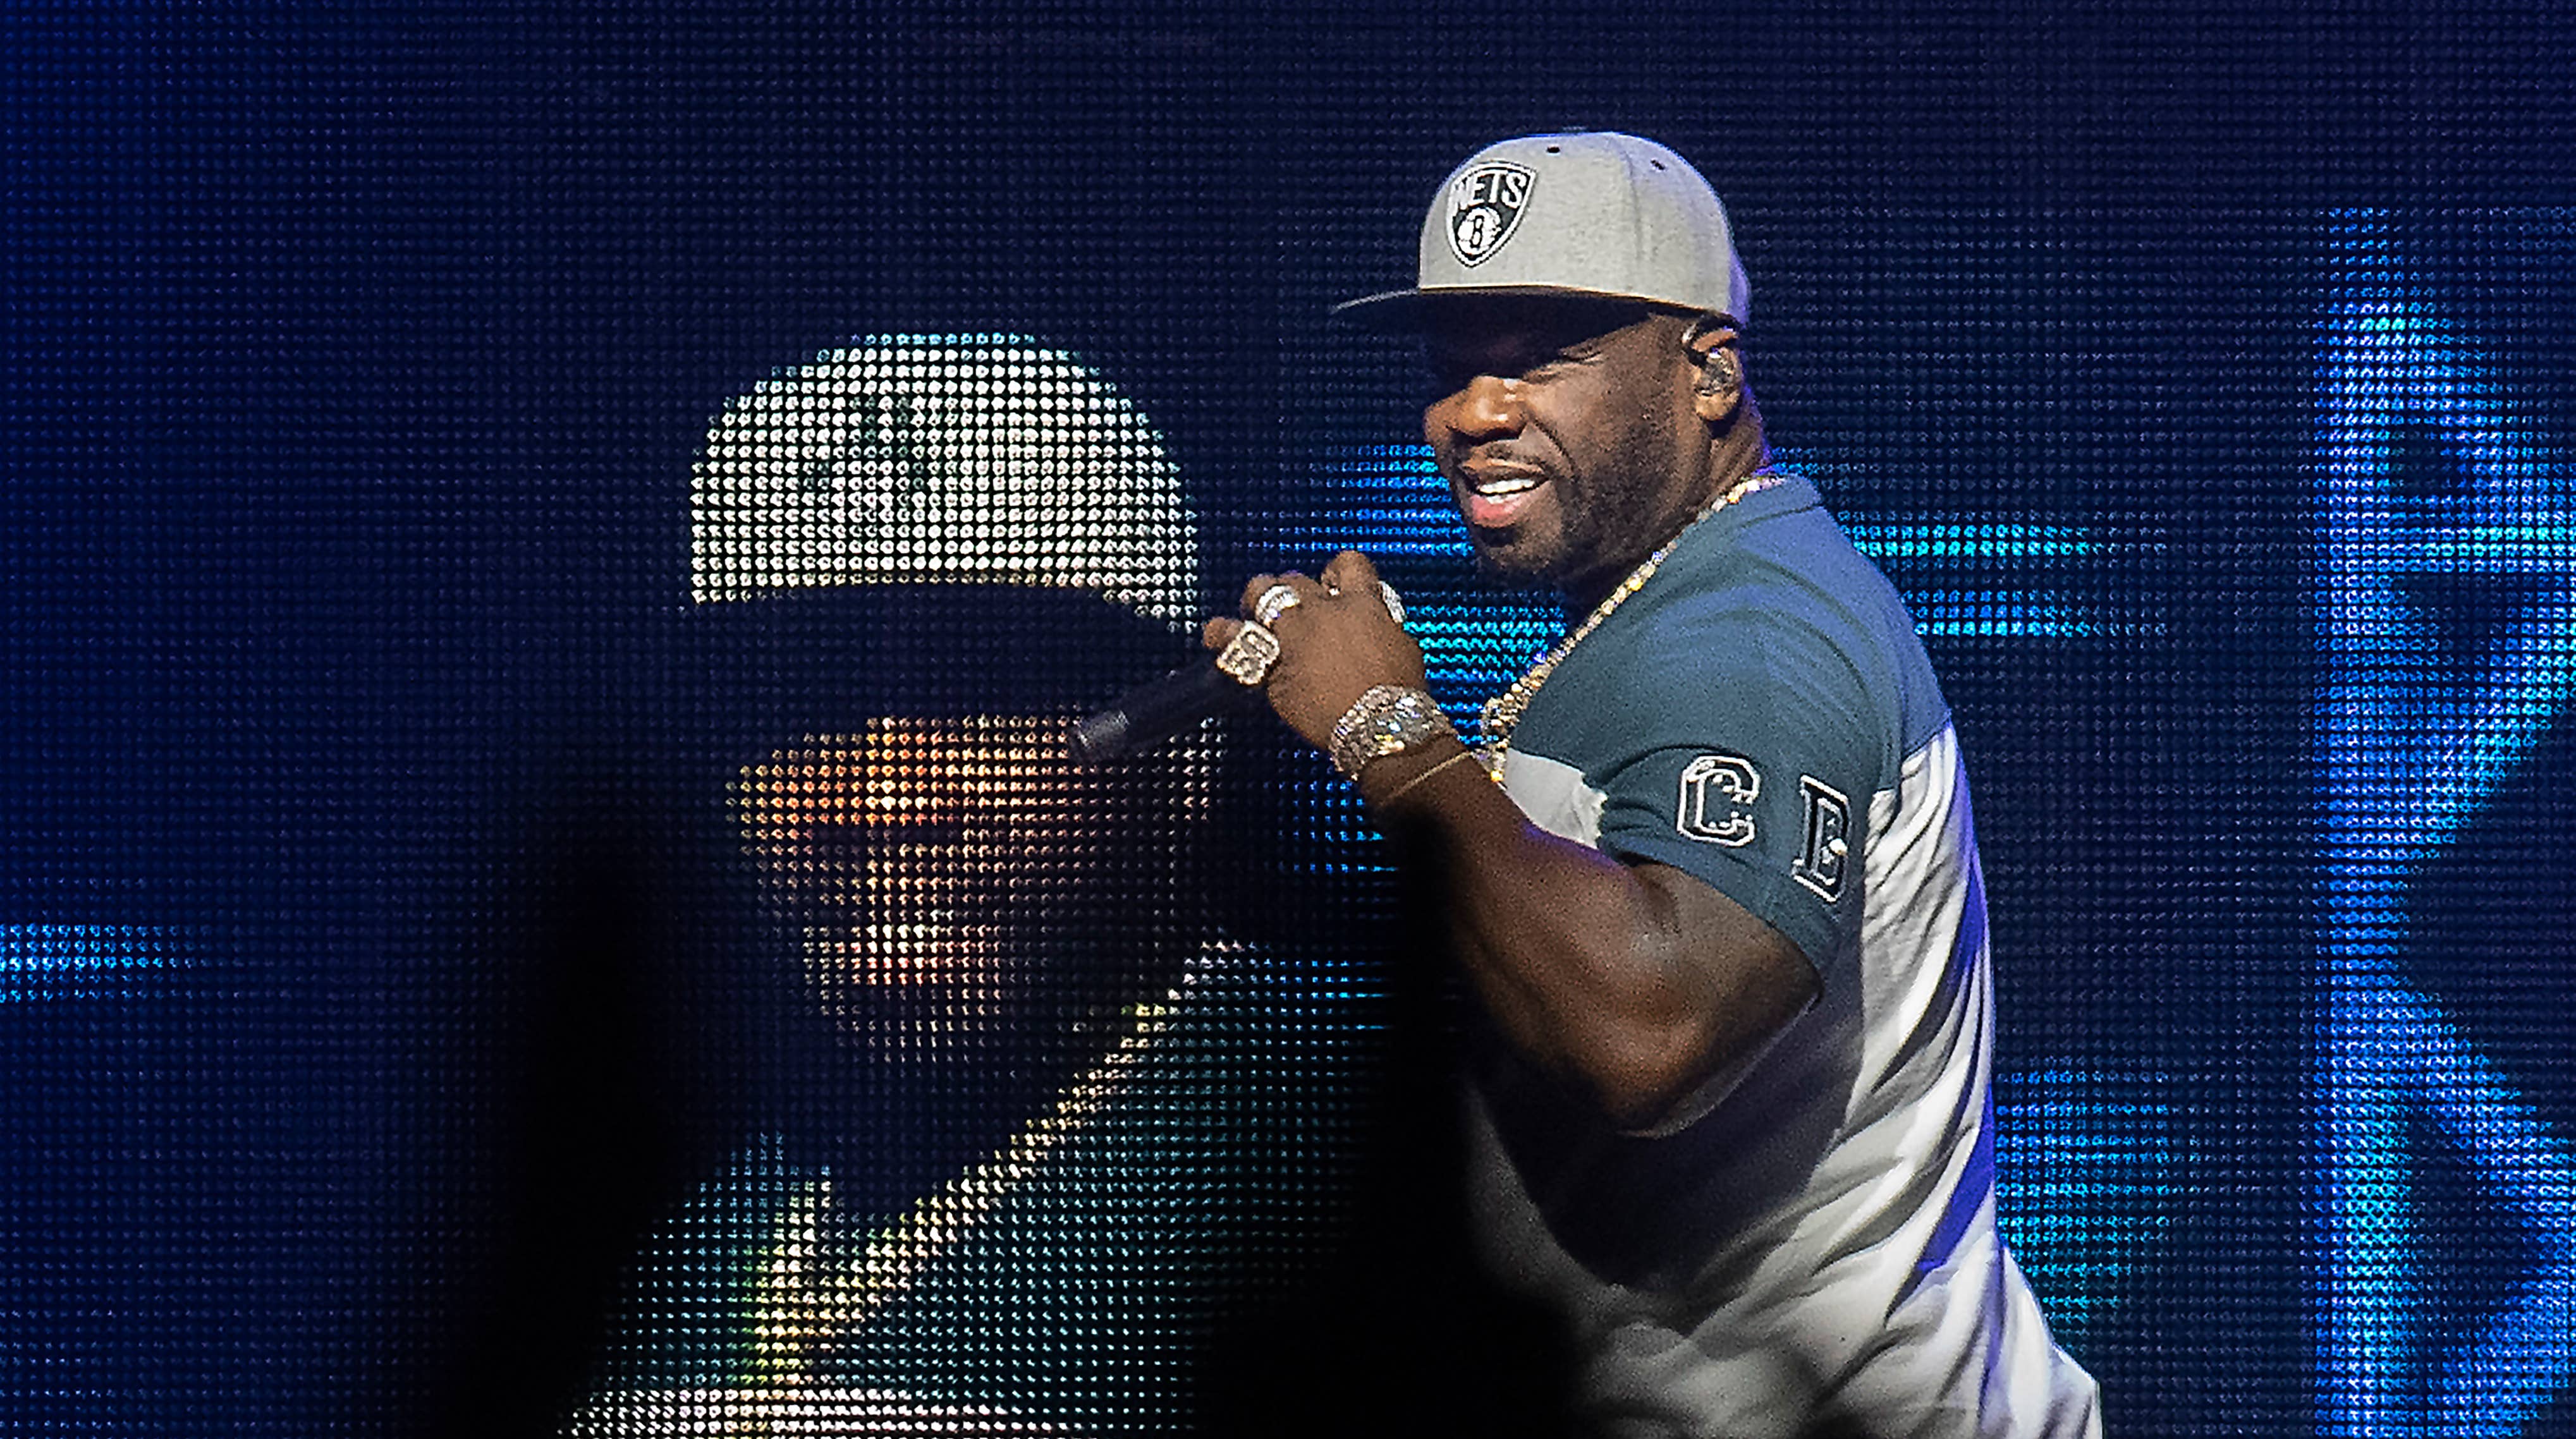 Rapper 50 Cent performing live